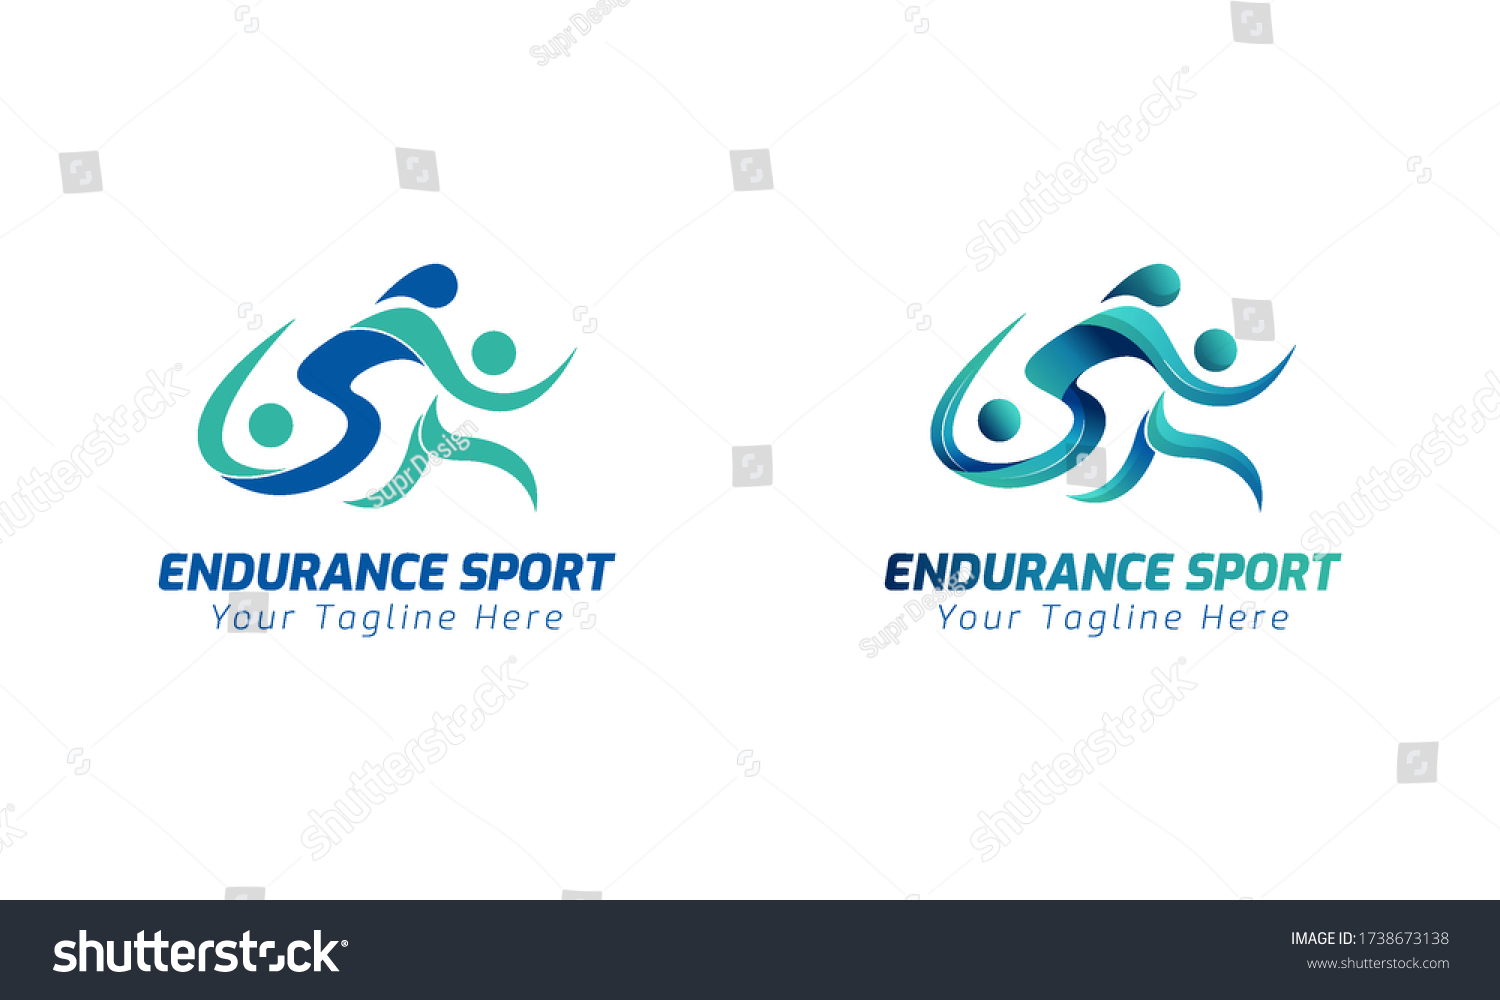 Ørken Tekstforfatter Kan Endurance Sports Logo That Combines Swimming Stock Vector (Royalty Free)  1738673138